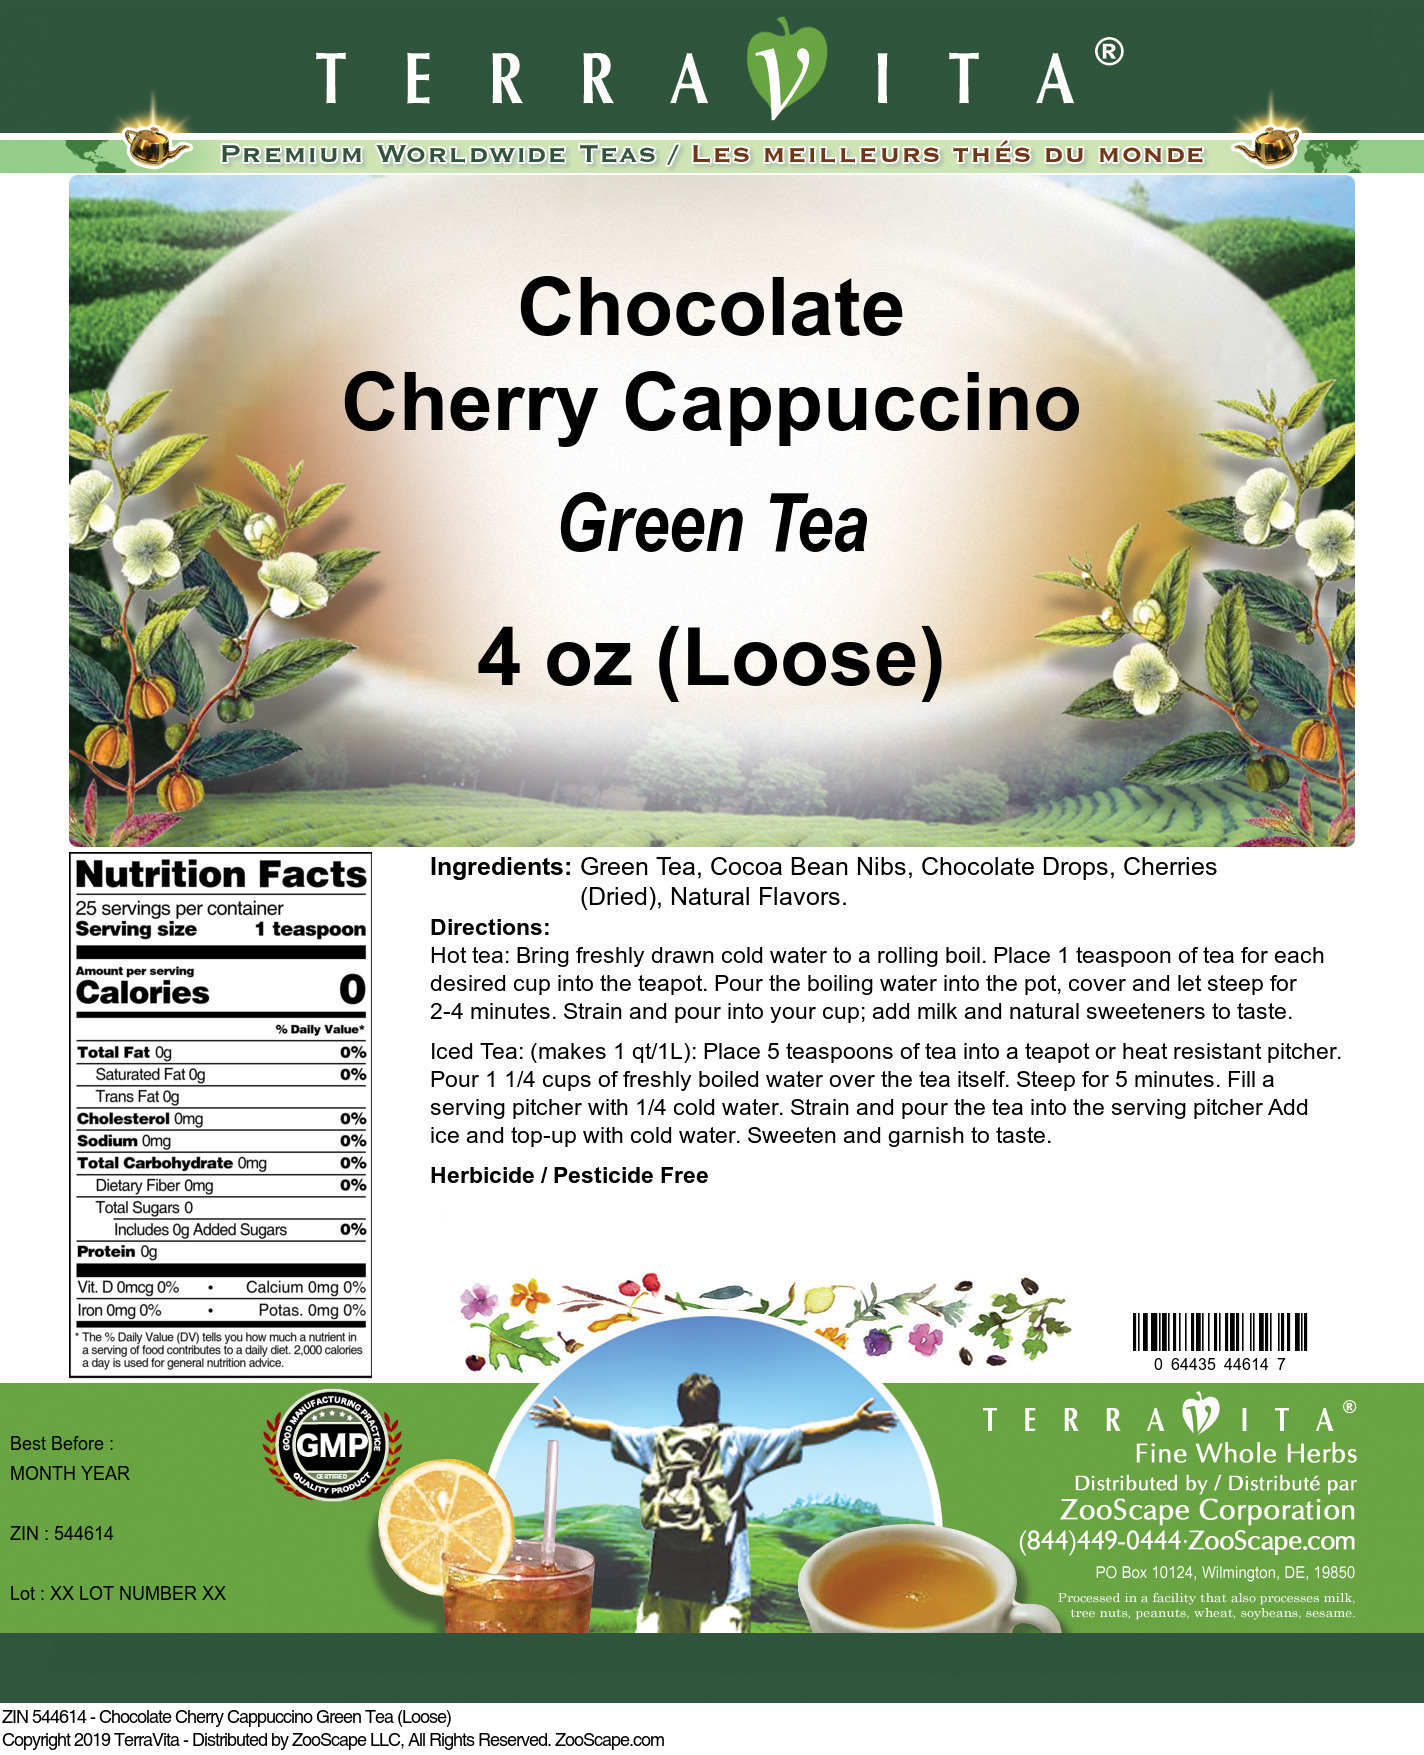 Chocolate Cherry Cappuccino Green Tea (Loose) - Label